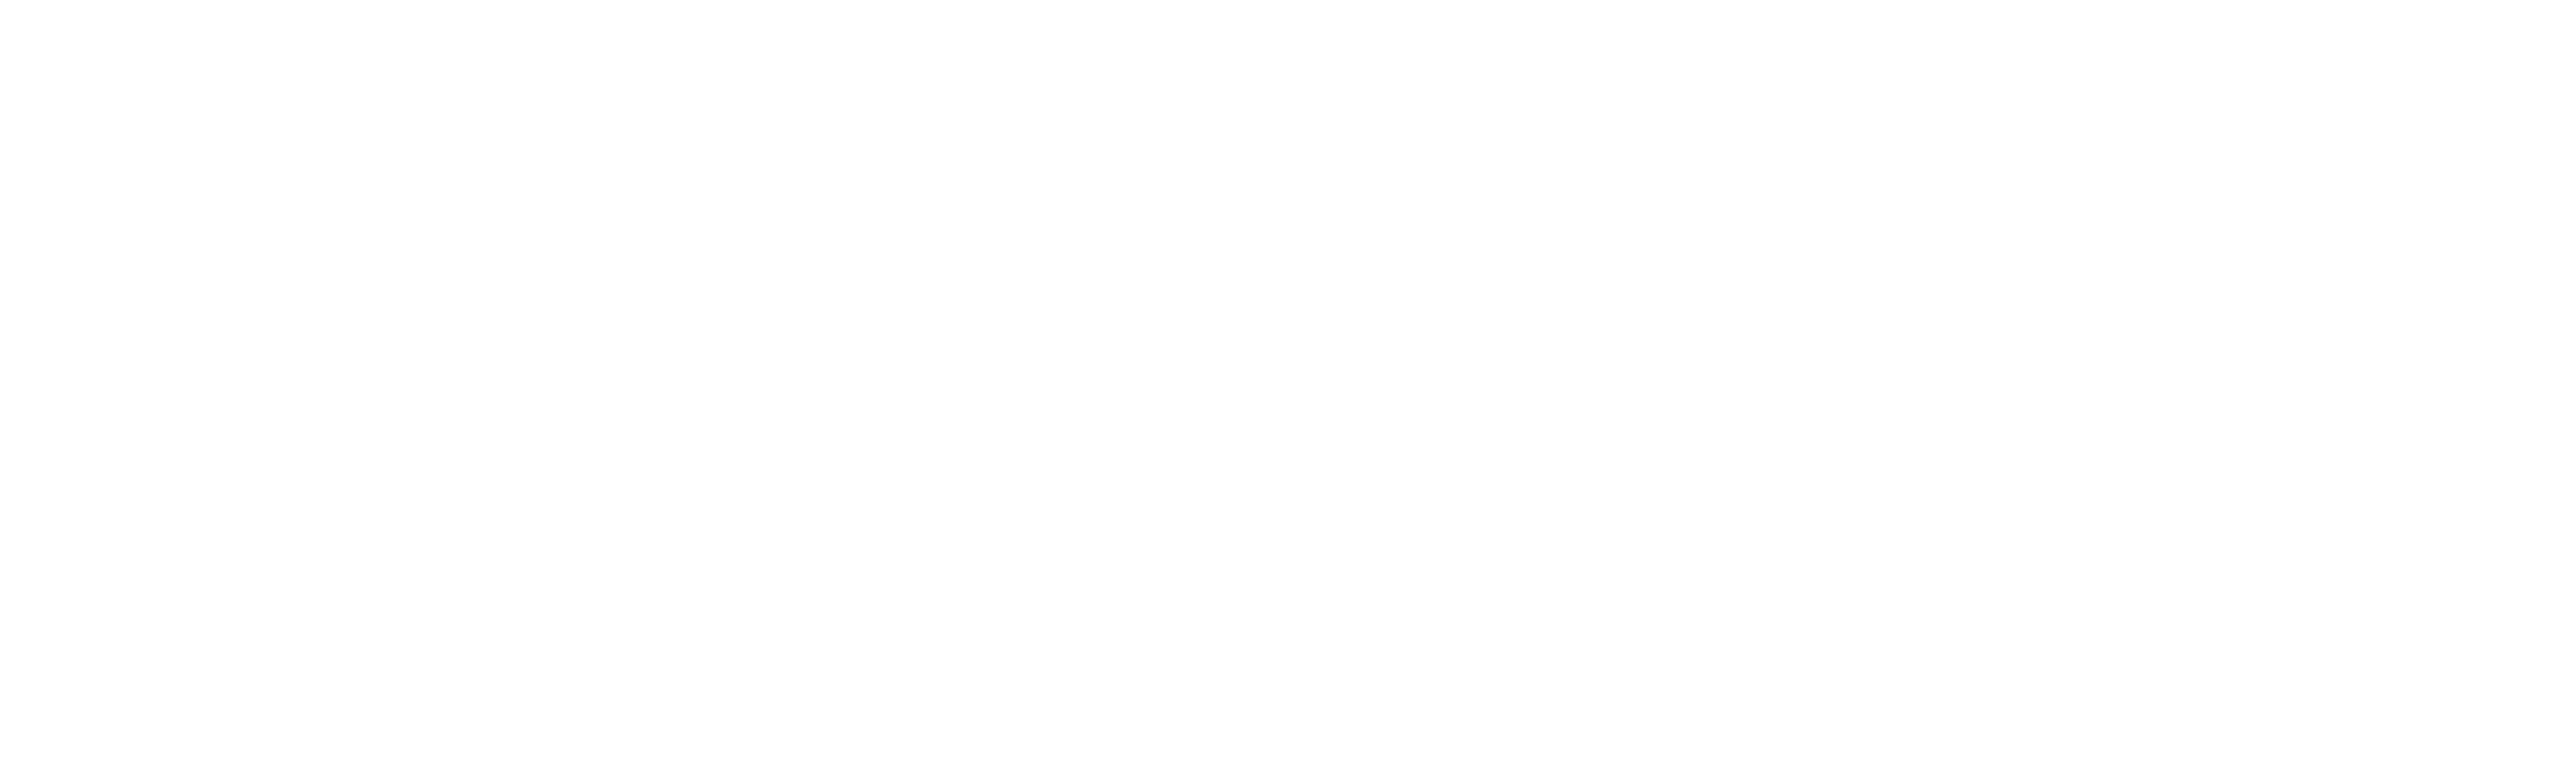 Sash & Cash Championship Horse Show Sash & Cash Championship - Alaska Elk 1795 Logo (3145x1027), Png Download